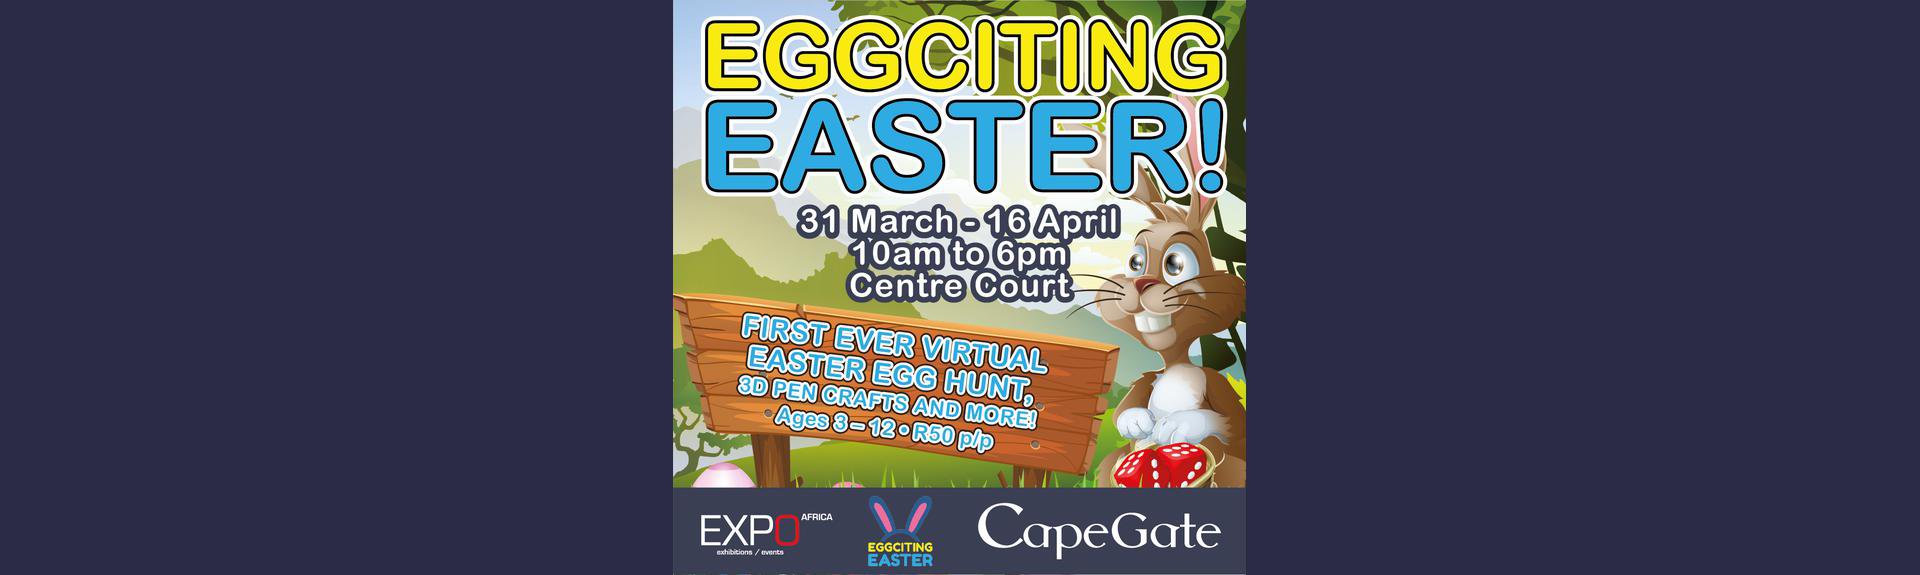 Eggciting Easter